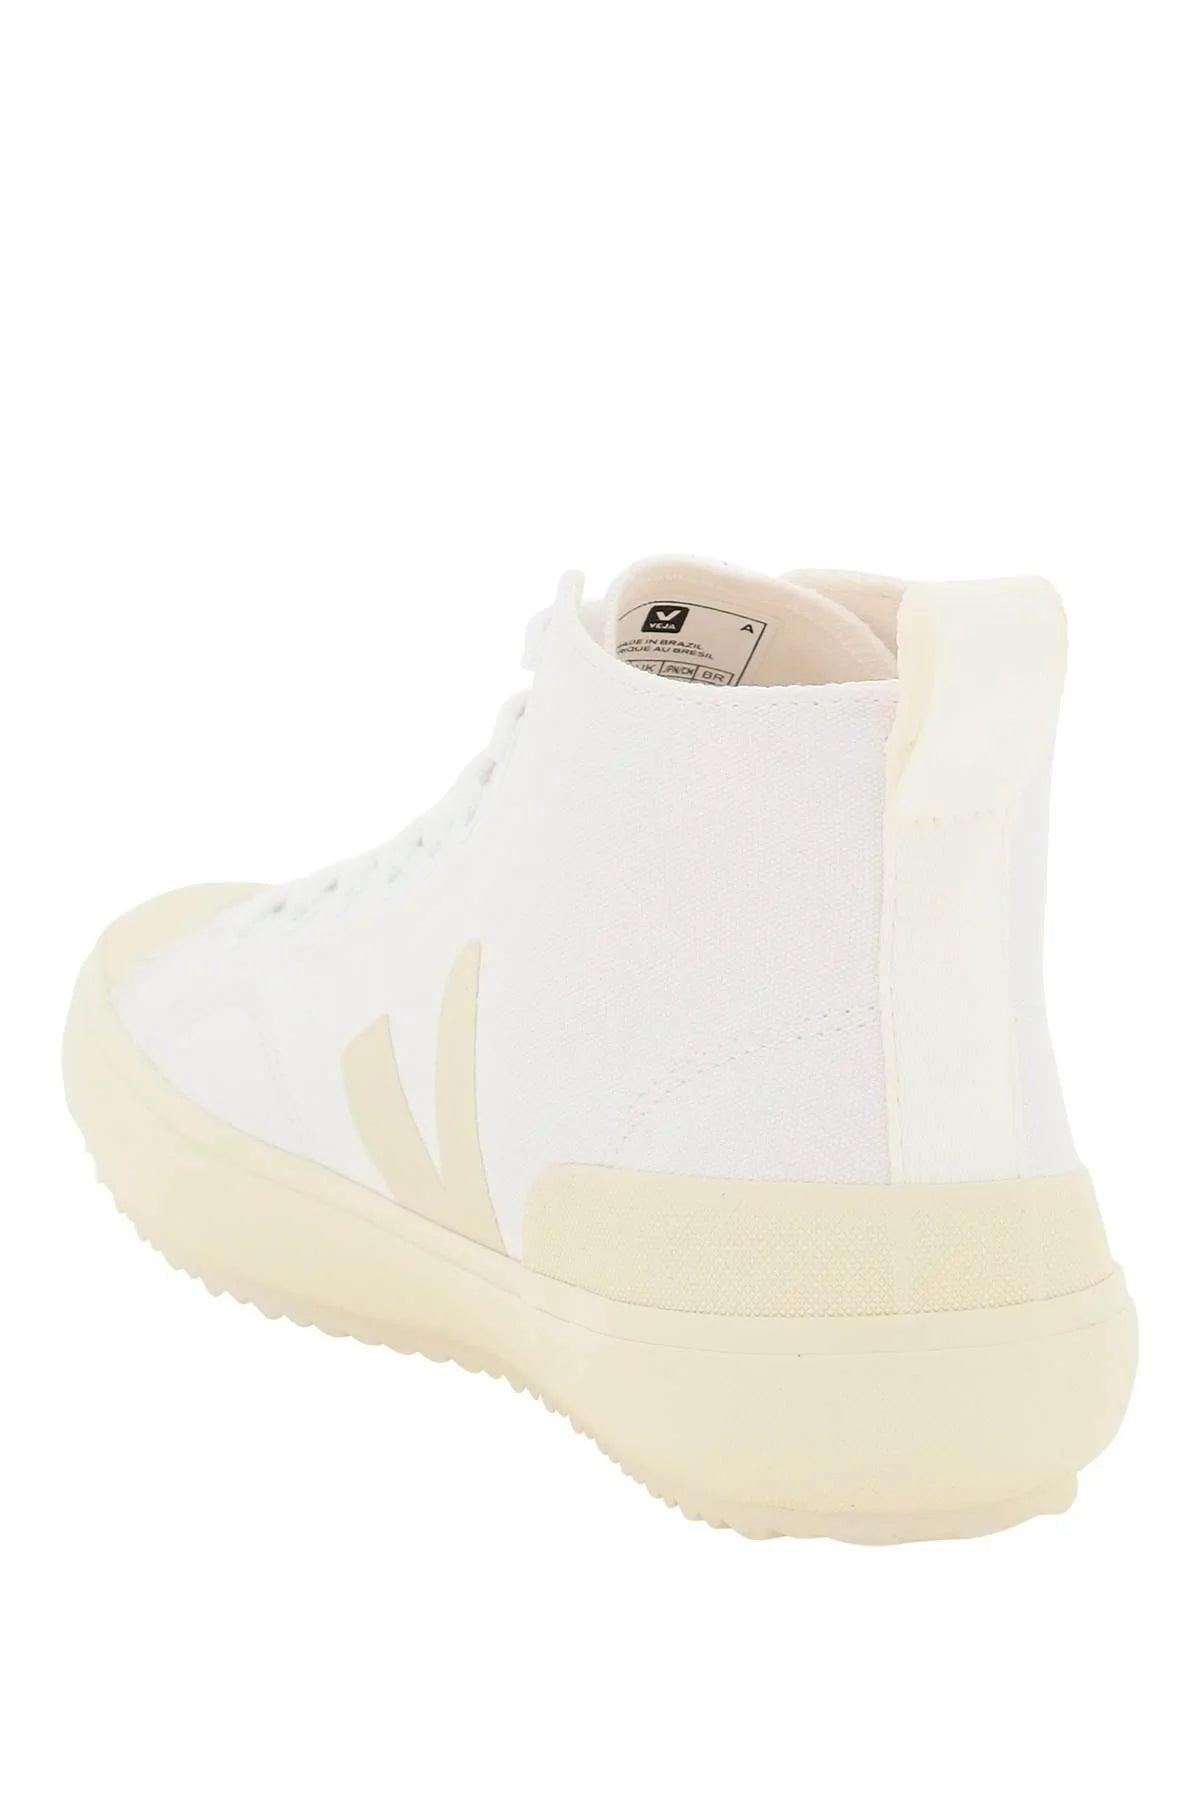 Veja High Nova Canvas Sneakers White Cotton | Lyst